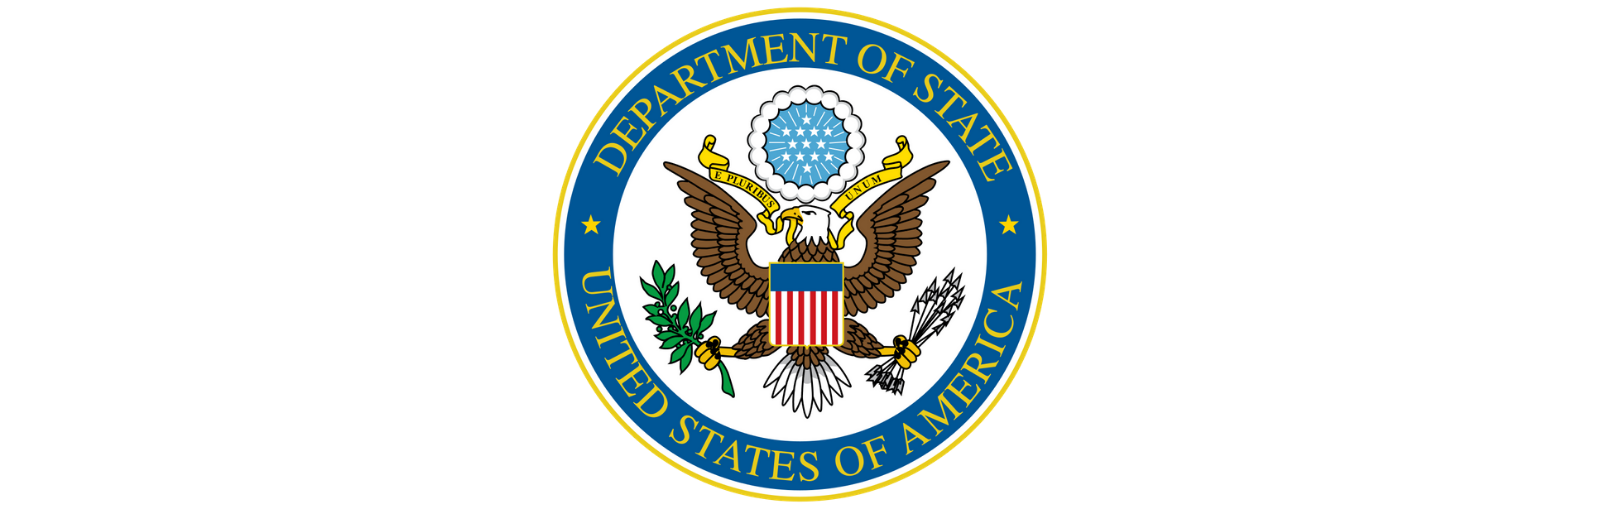 Державний департамент США